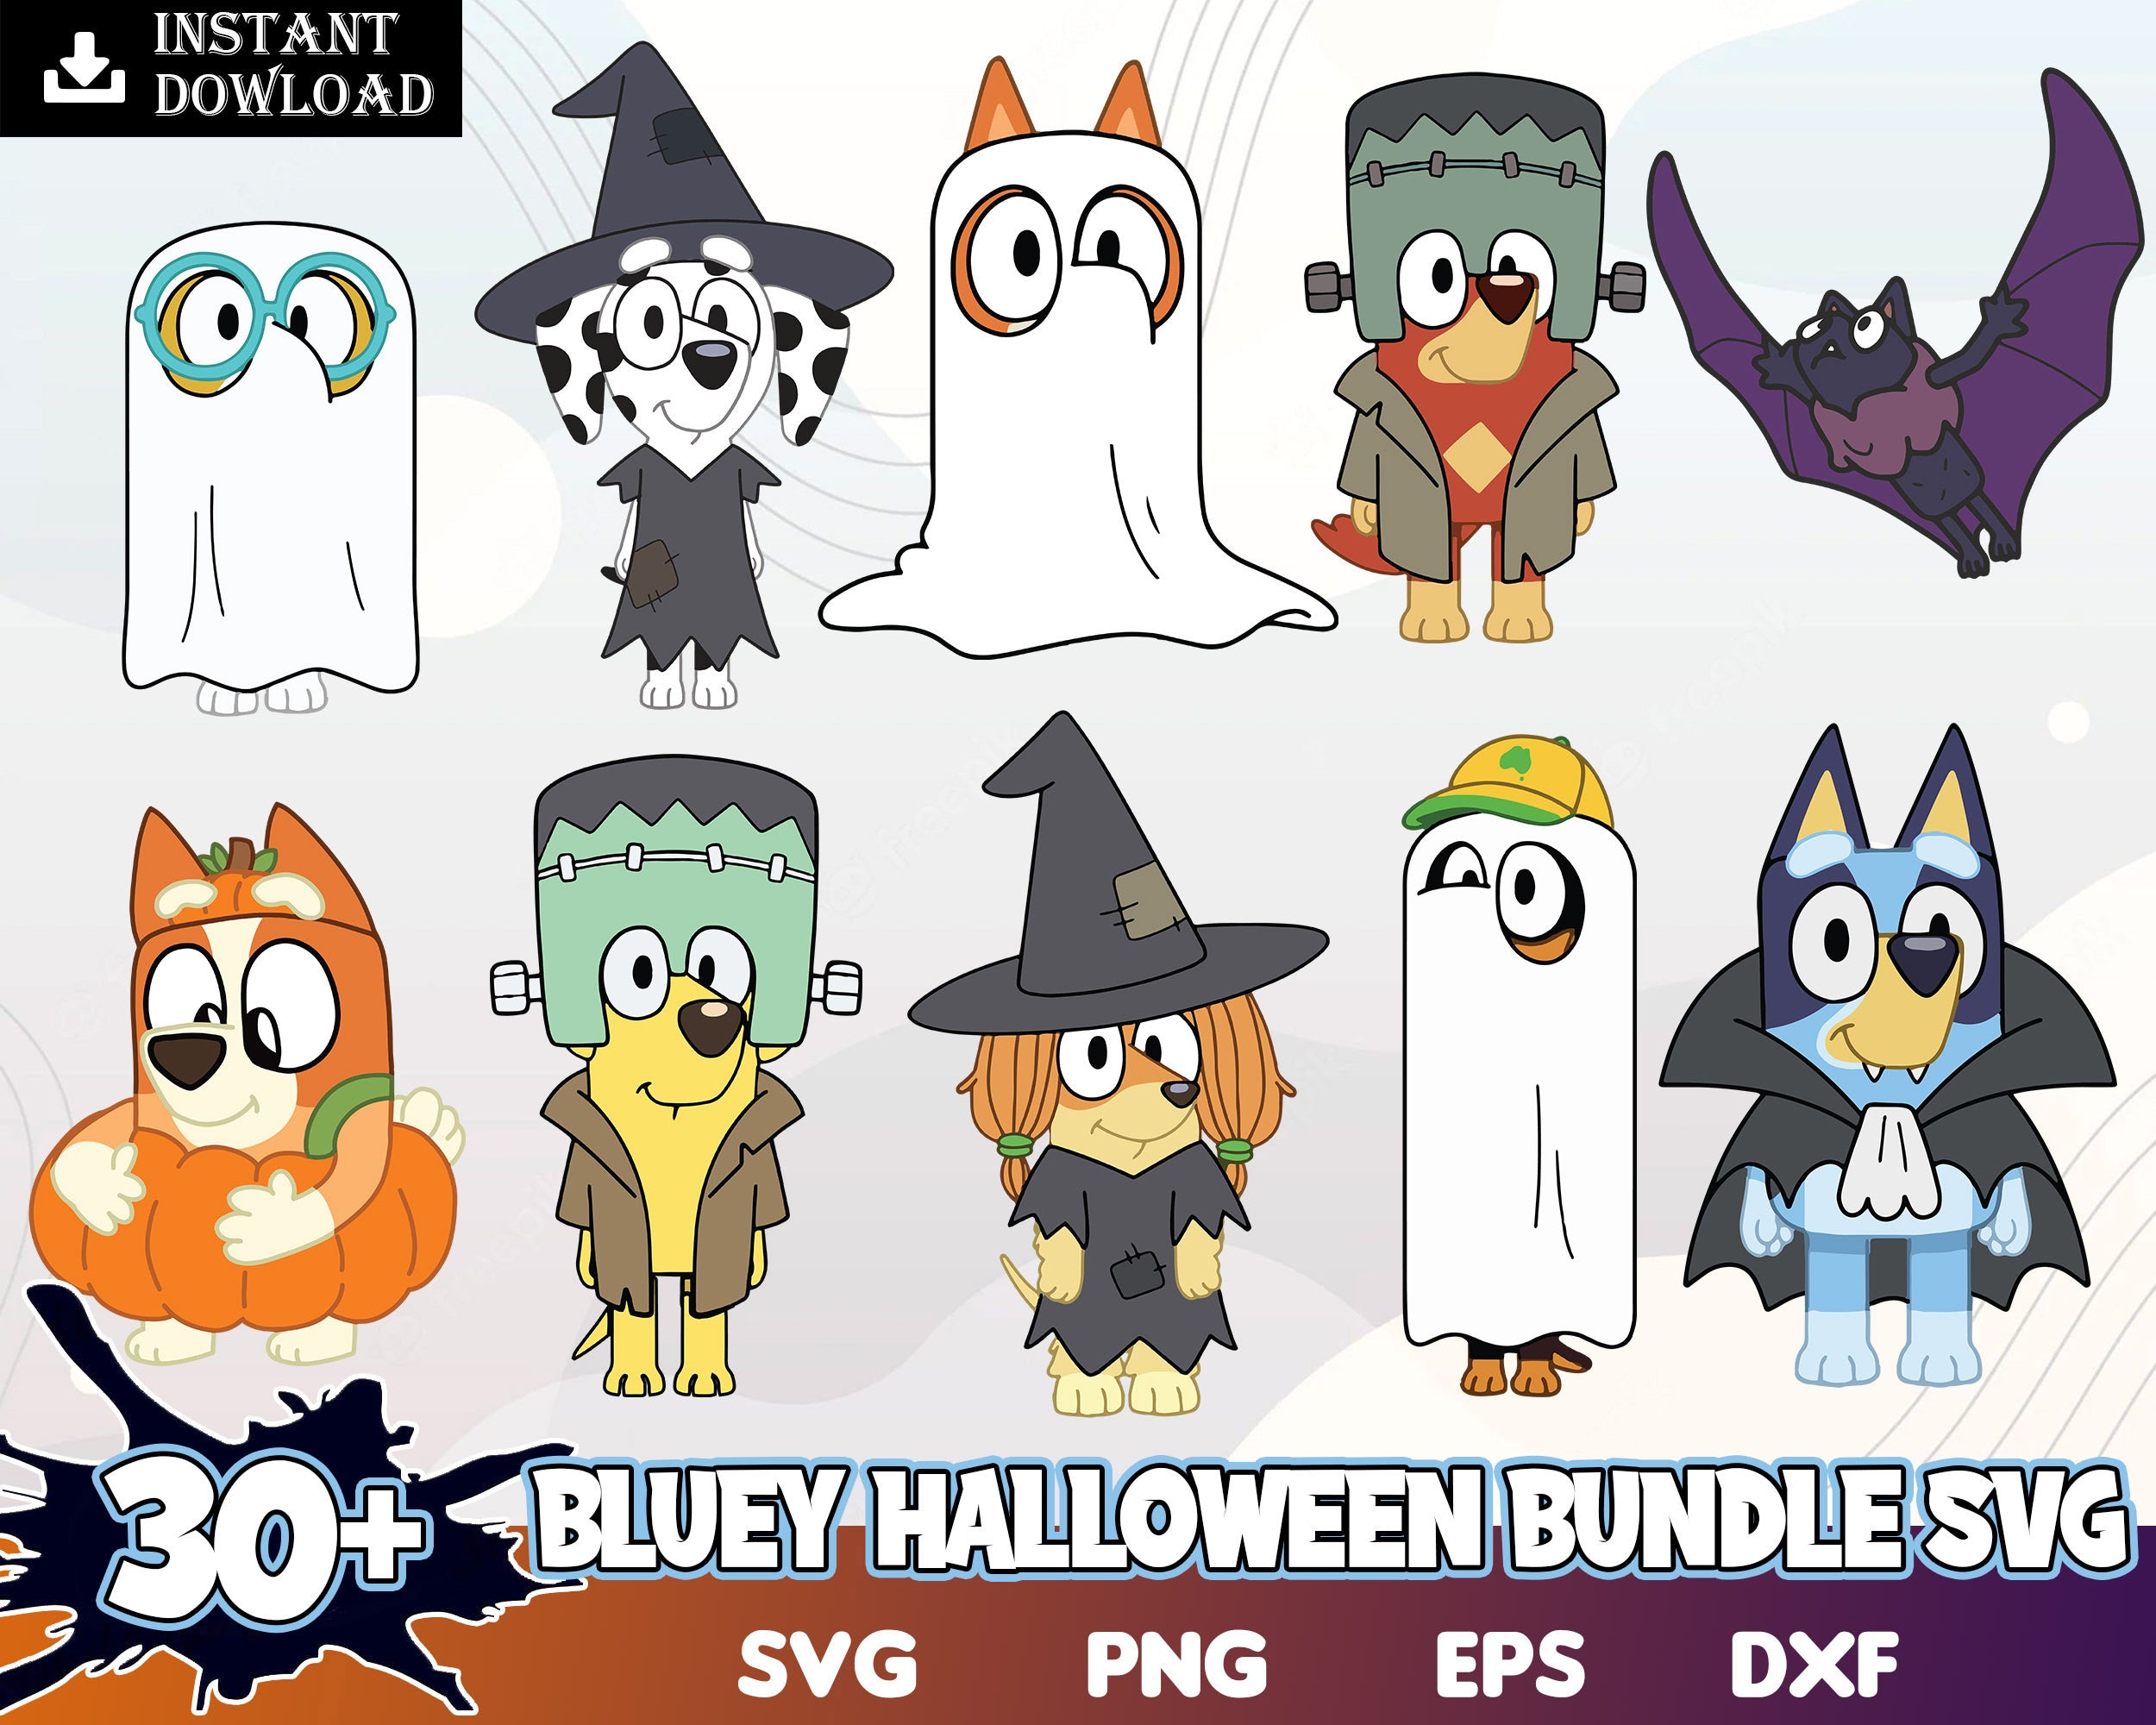 Halloween Bluey svg, Bluey vector, bluey horror in 4 formats, bluey cu